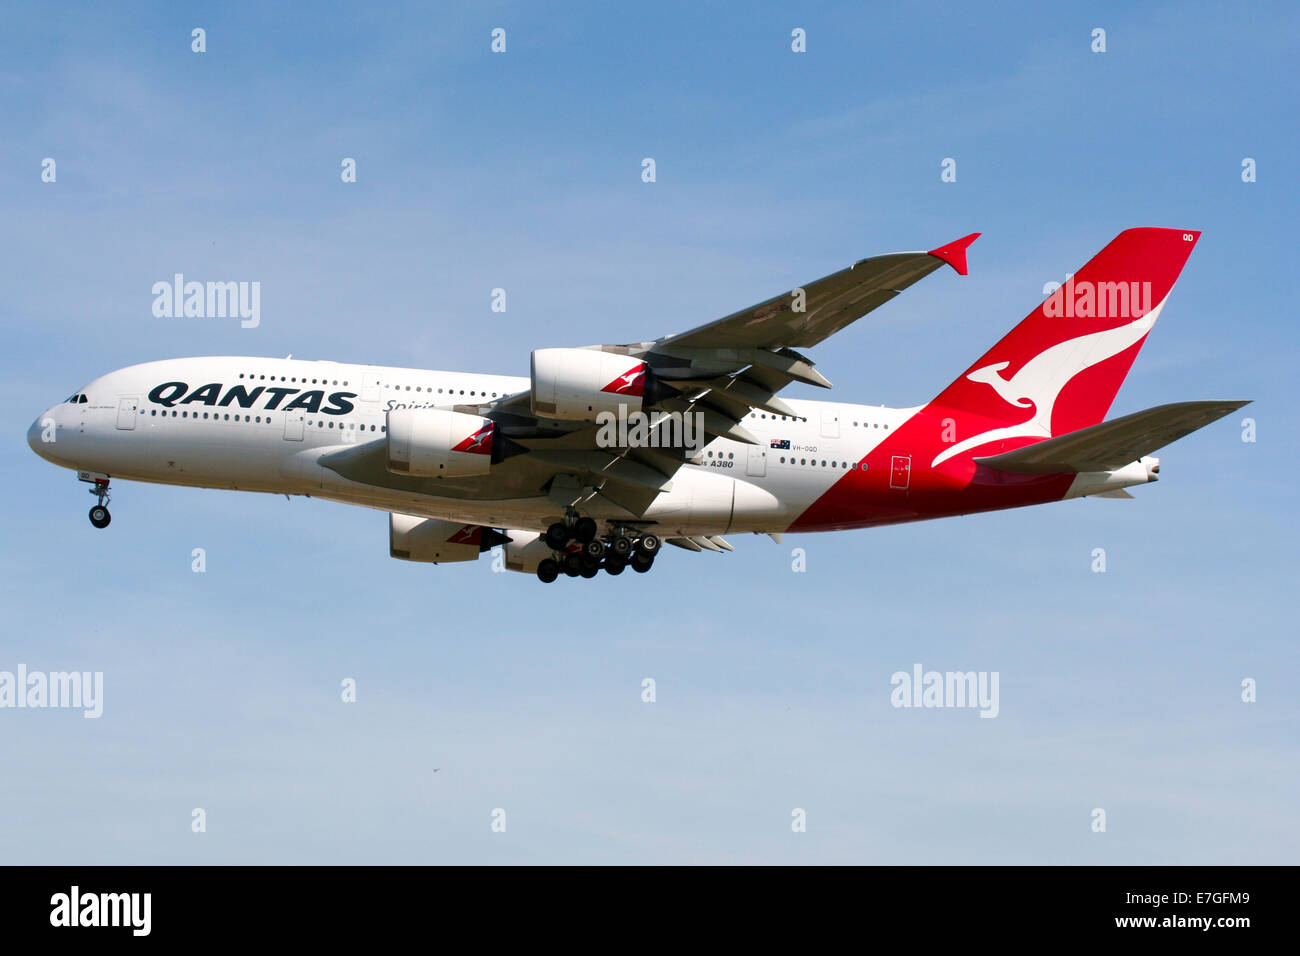 Qantas Airbus A380-800 approaches runway 27L at London Heathrow airport. Stock Photo